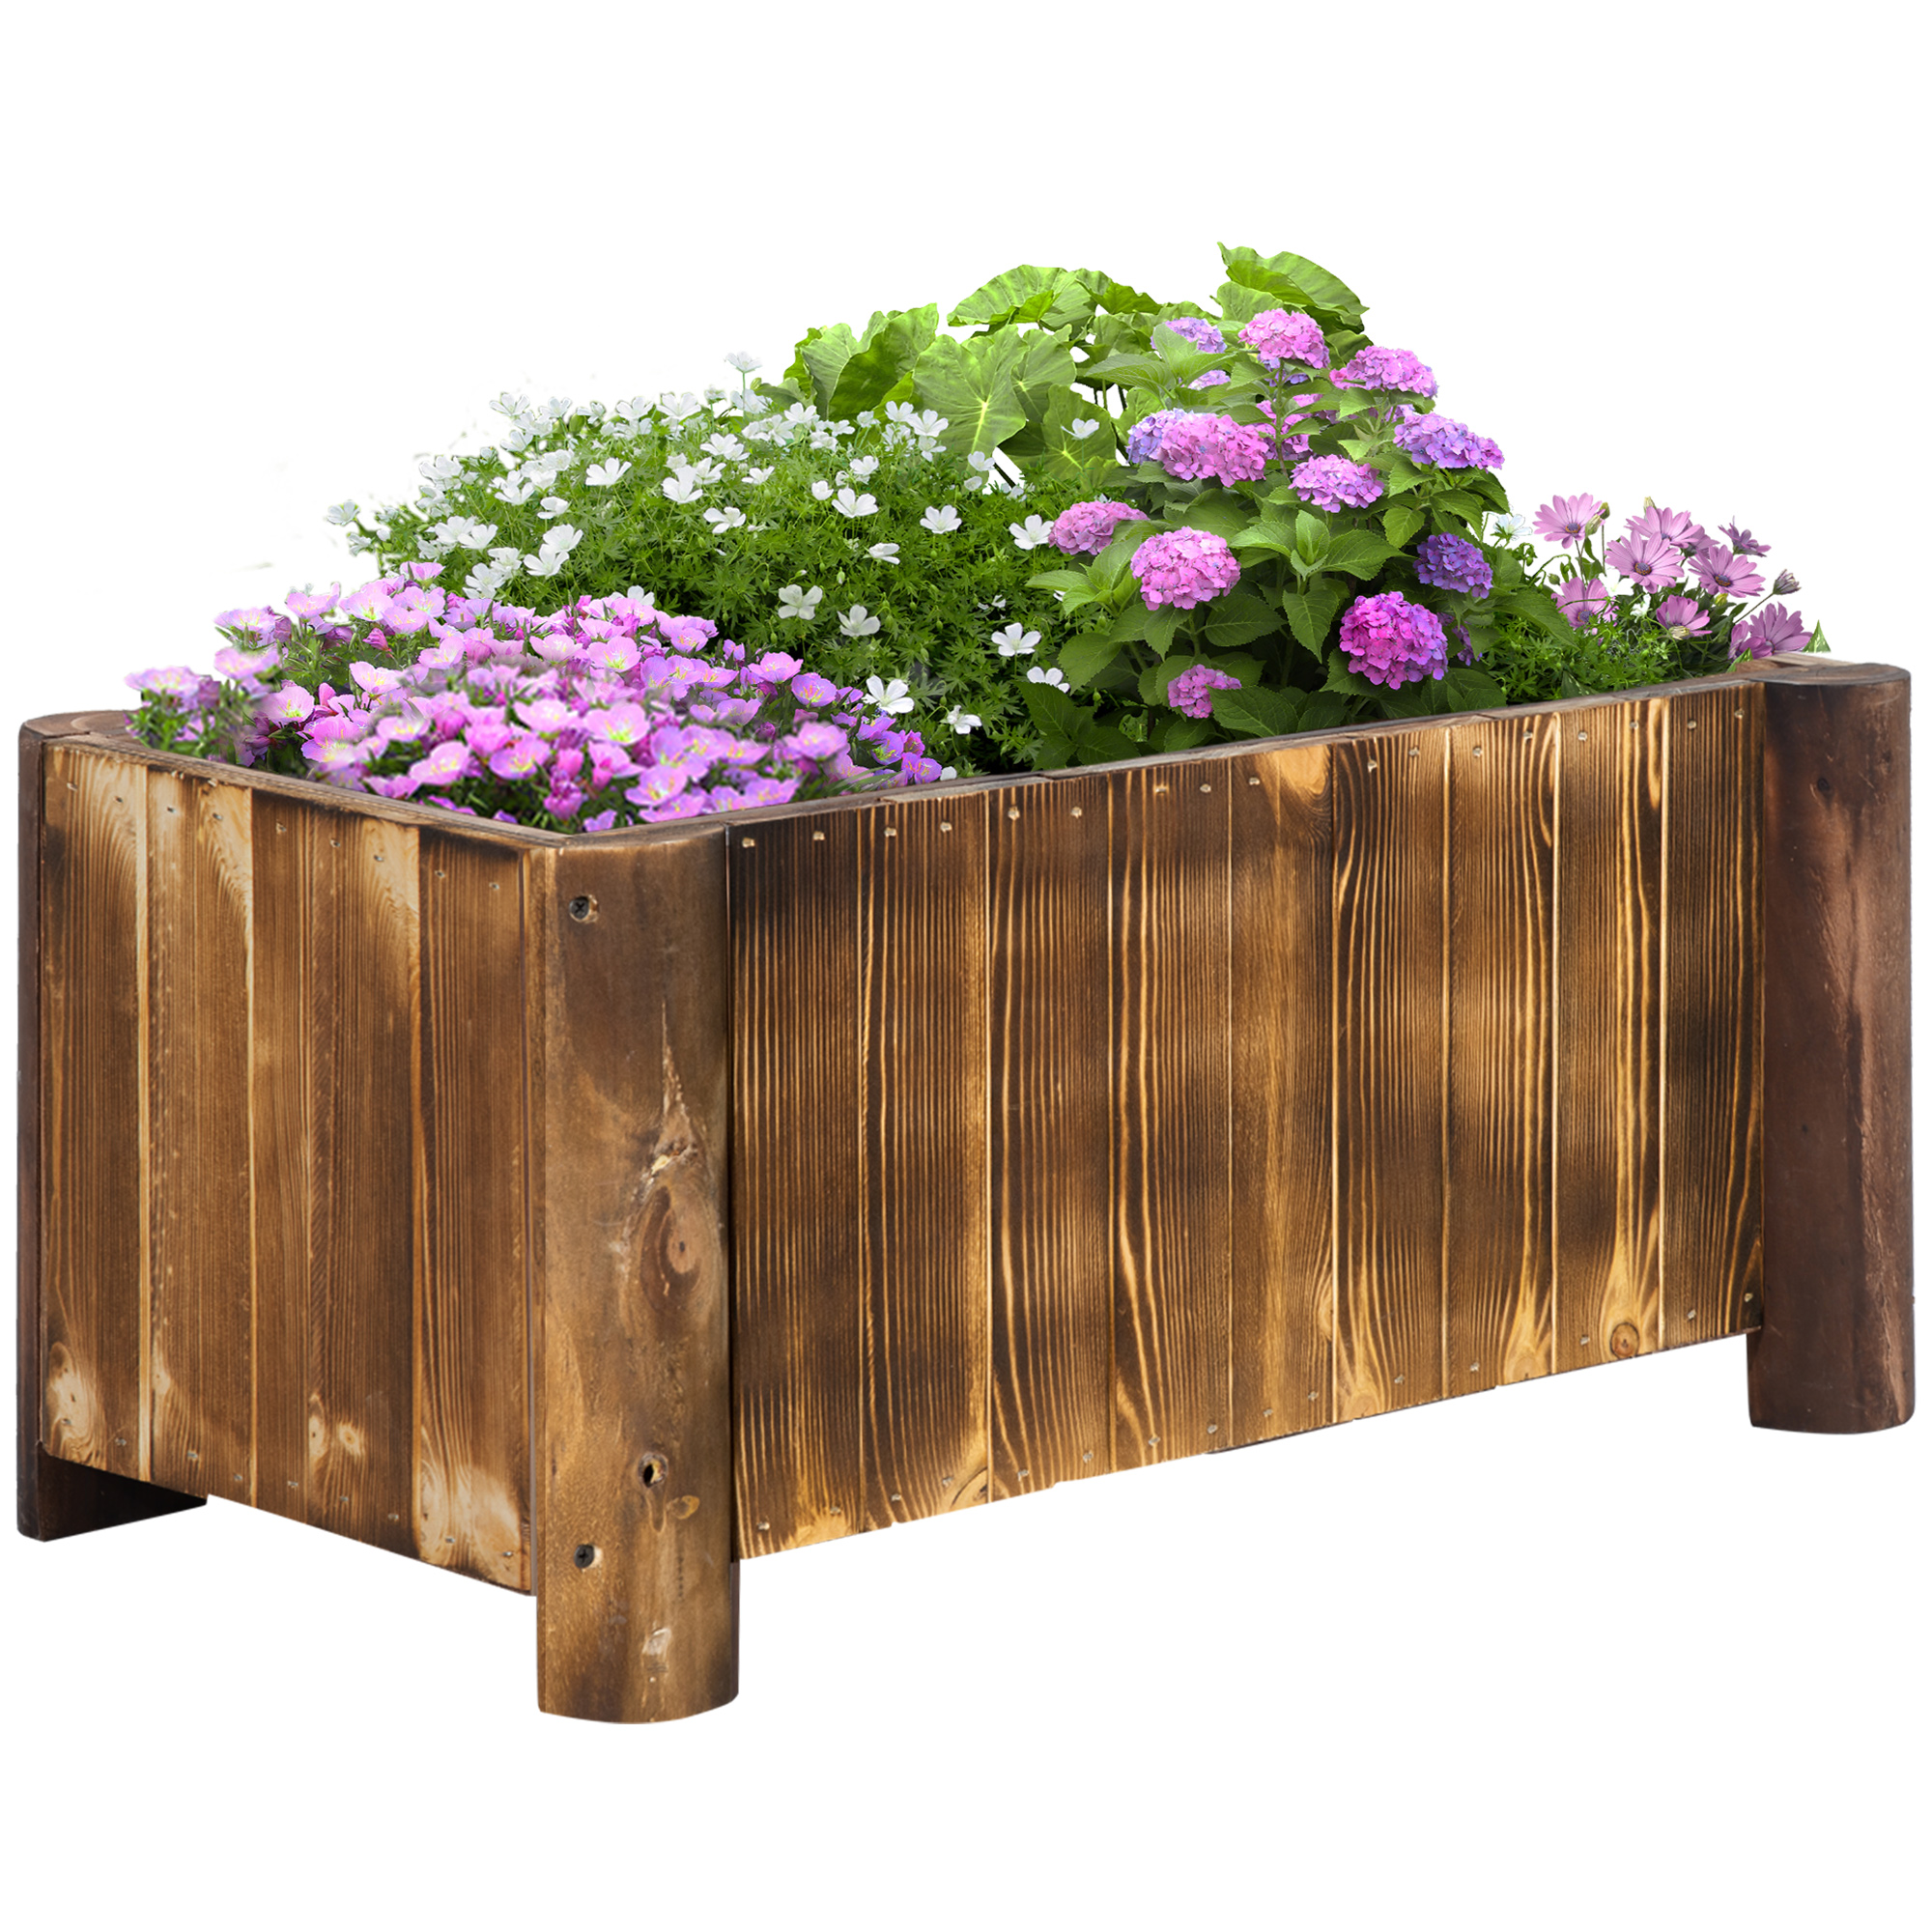 Outsunny Rectangular Planter Box για φυτά σε ξύλο ελάτης